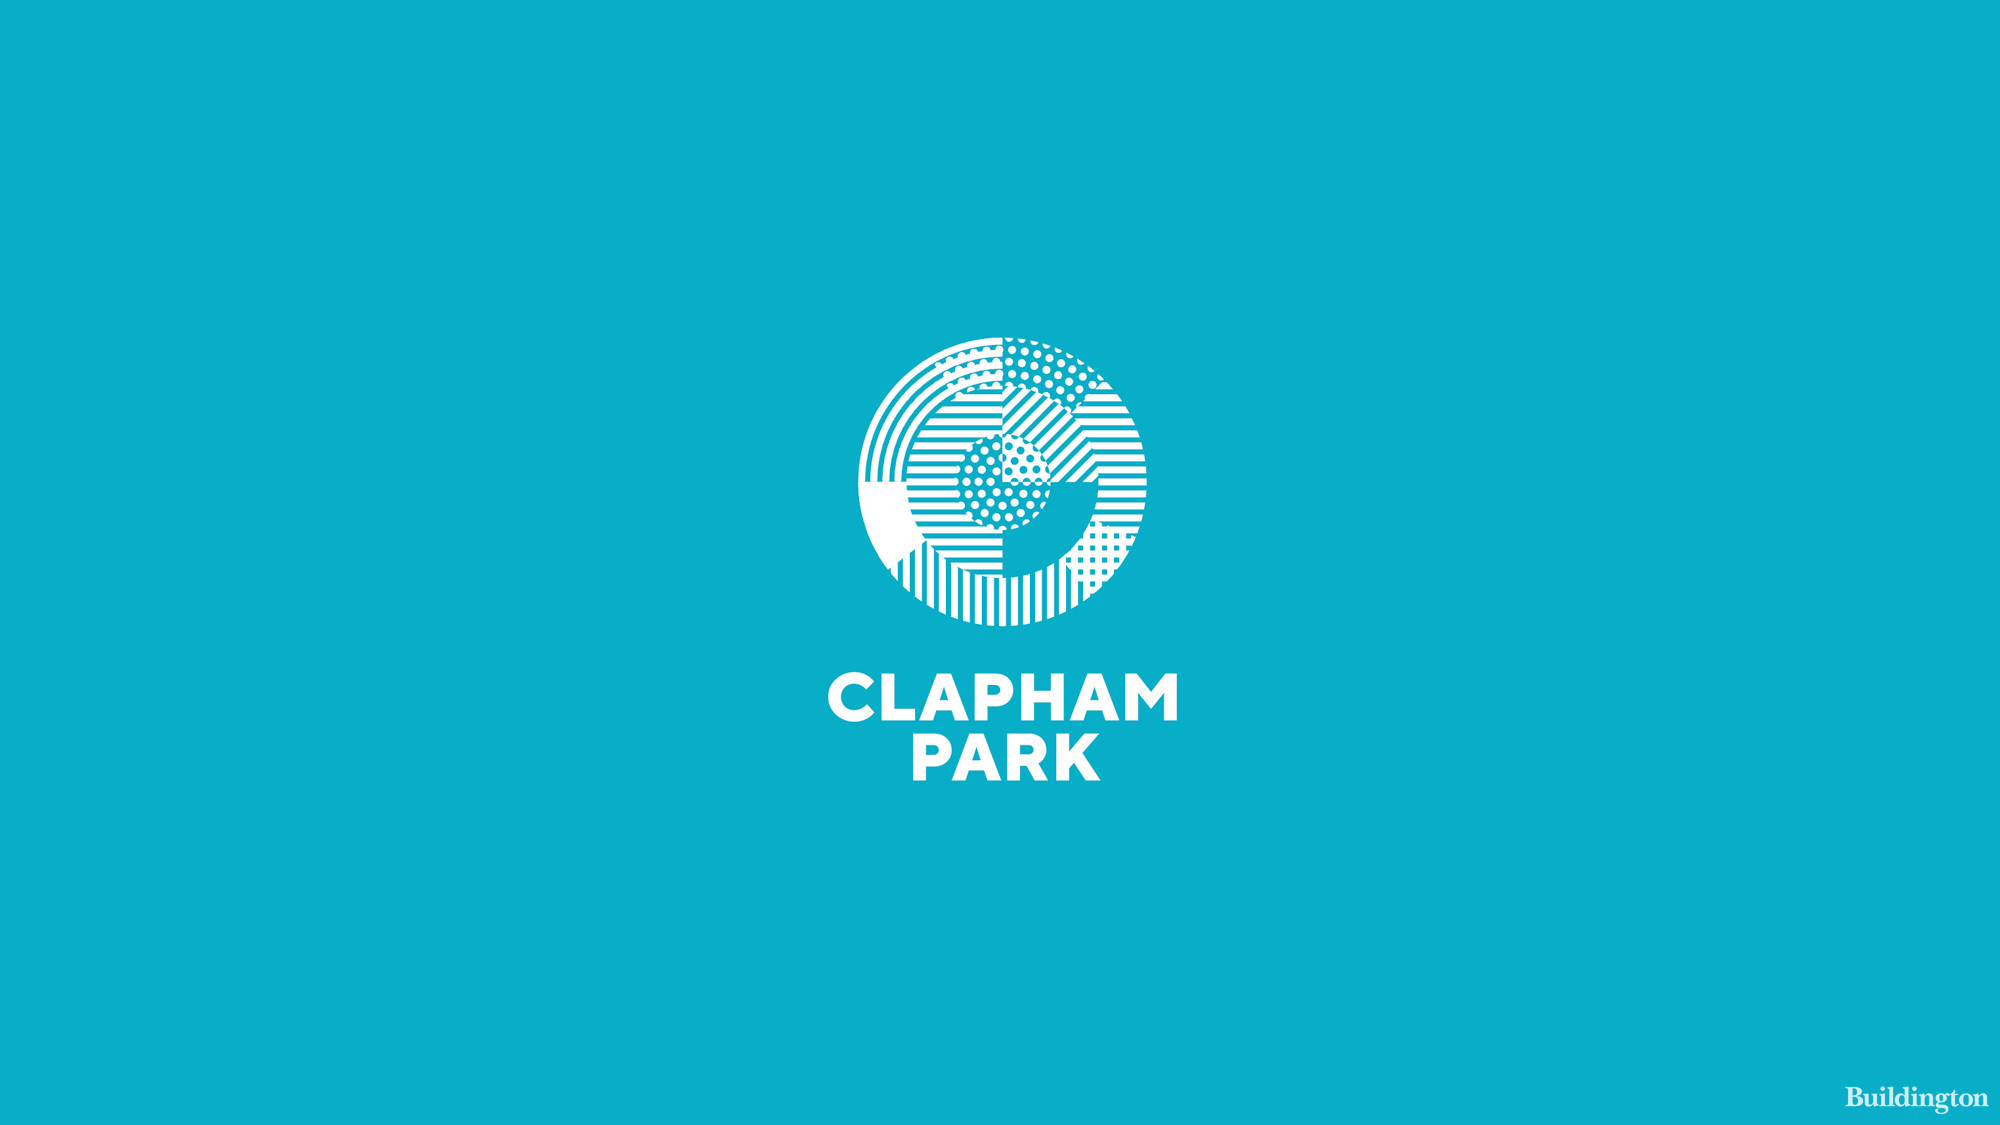 Clapham Park development logo